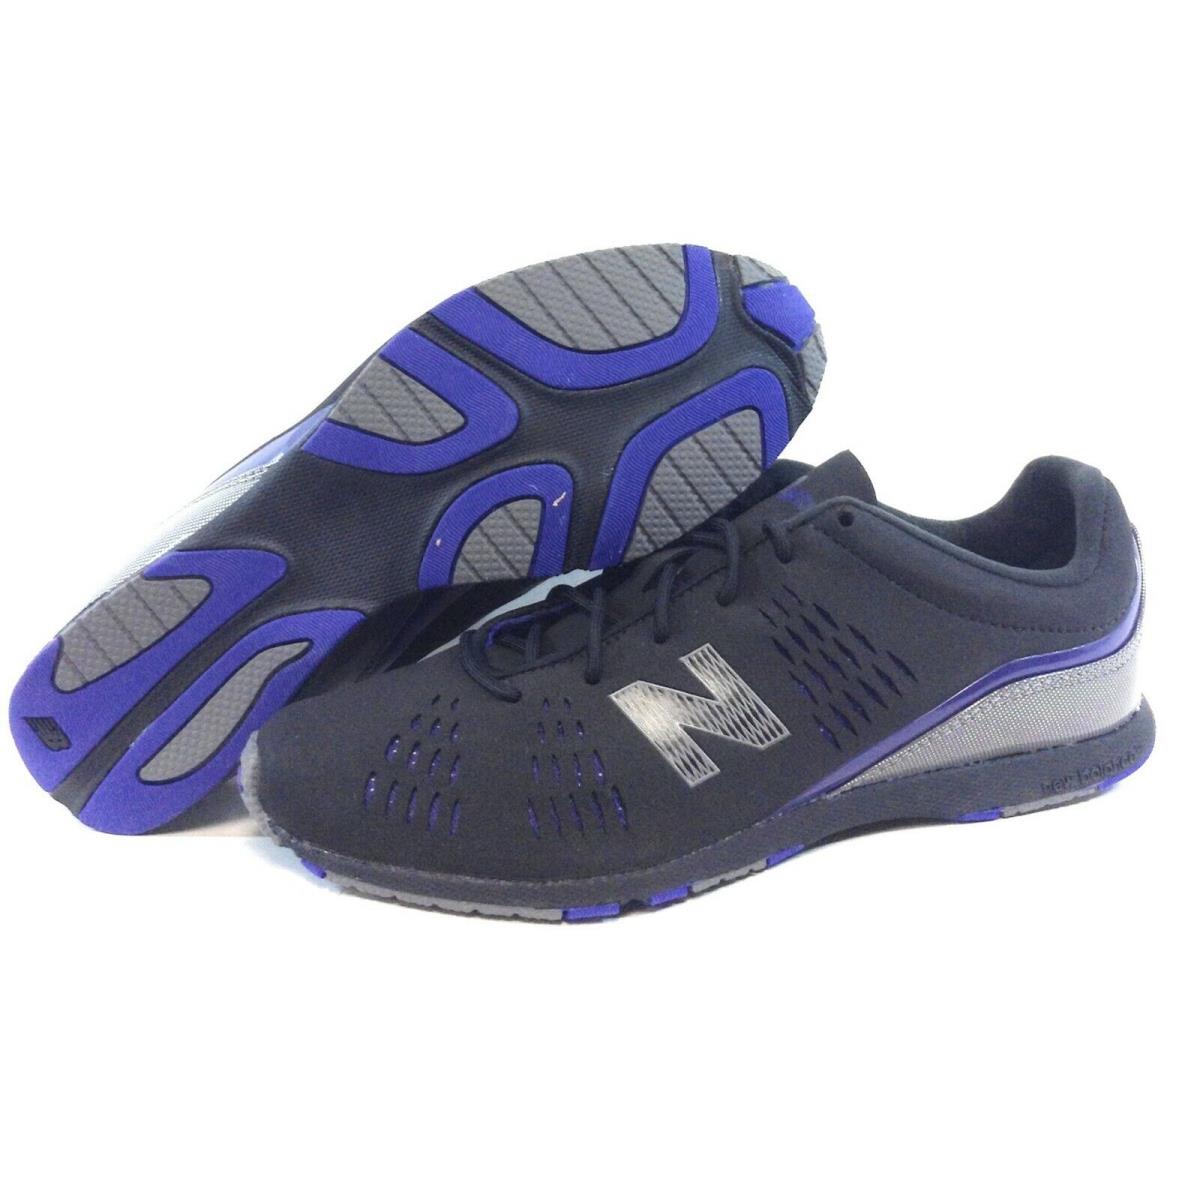 Womens New Balance 773 Sap Black Purple Low Profile Athletic Sneakers Shoes